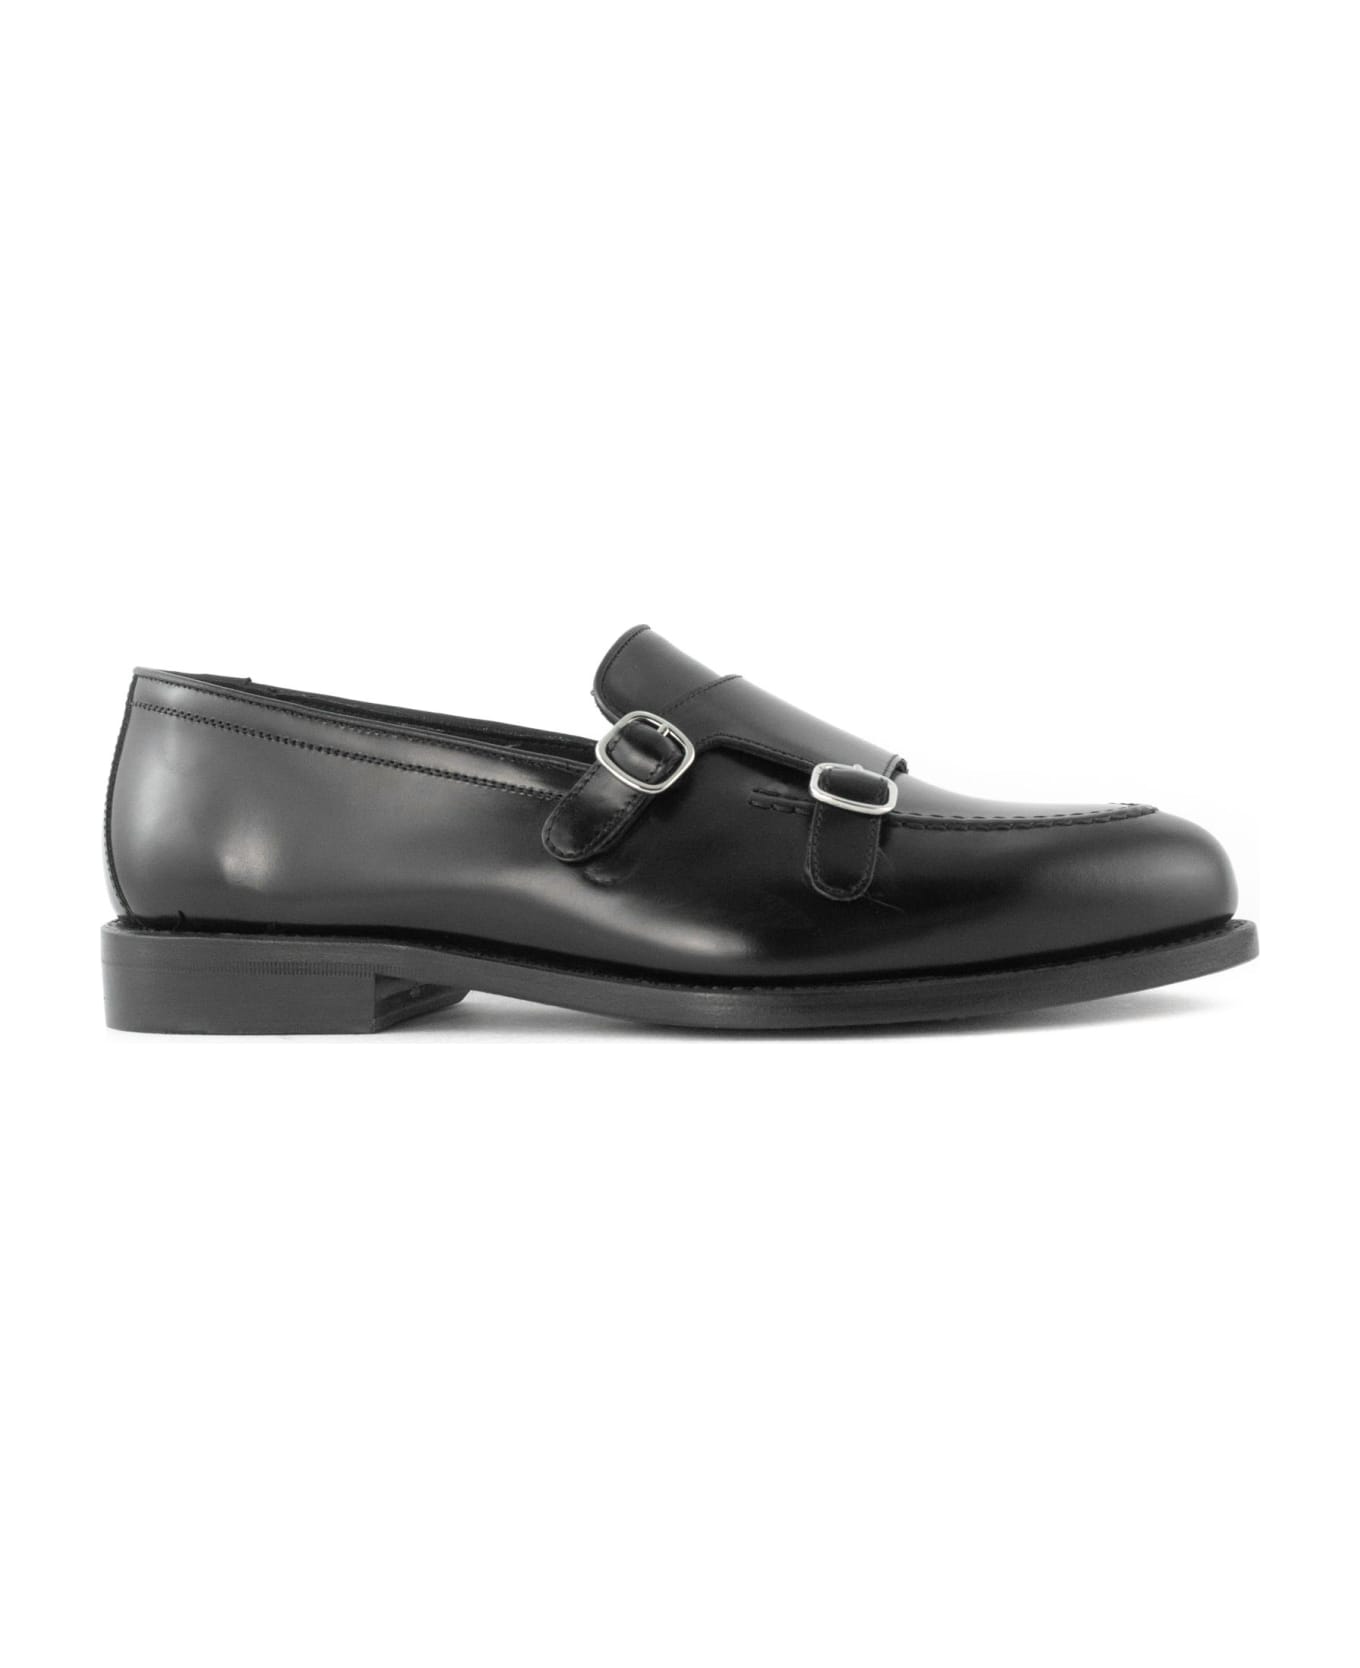 Berwick 1707 Black Calf Leather Monk Shoes - Black